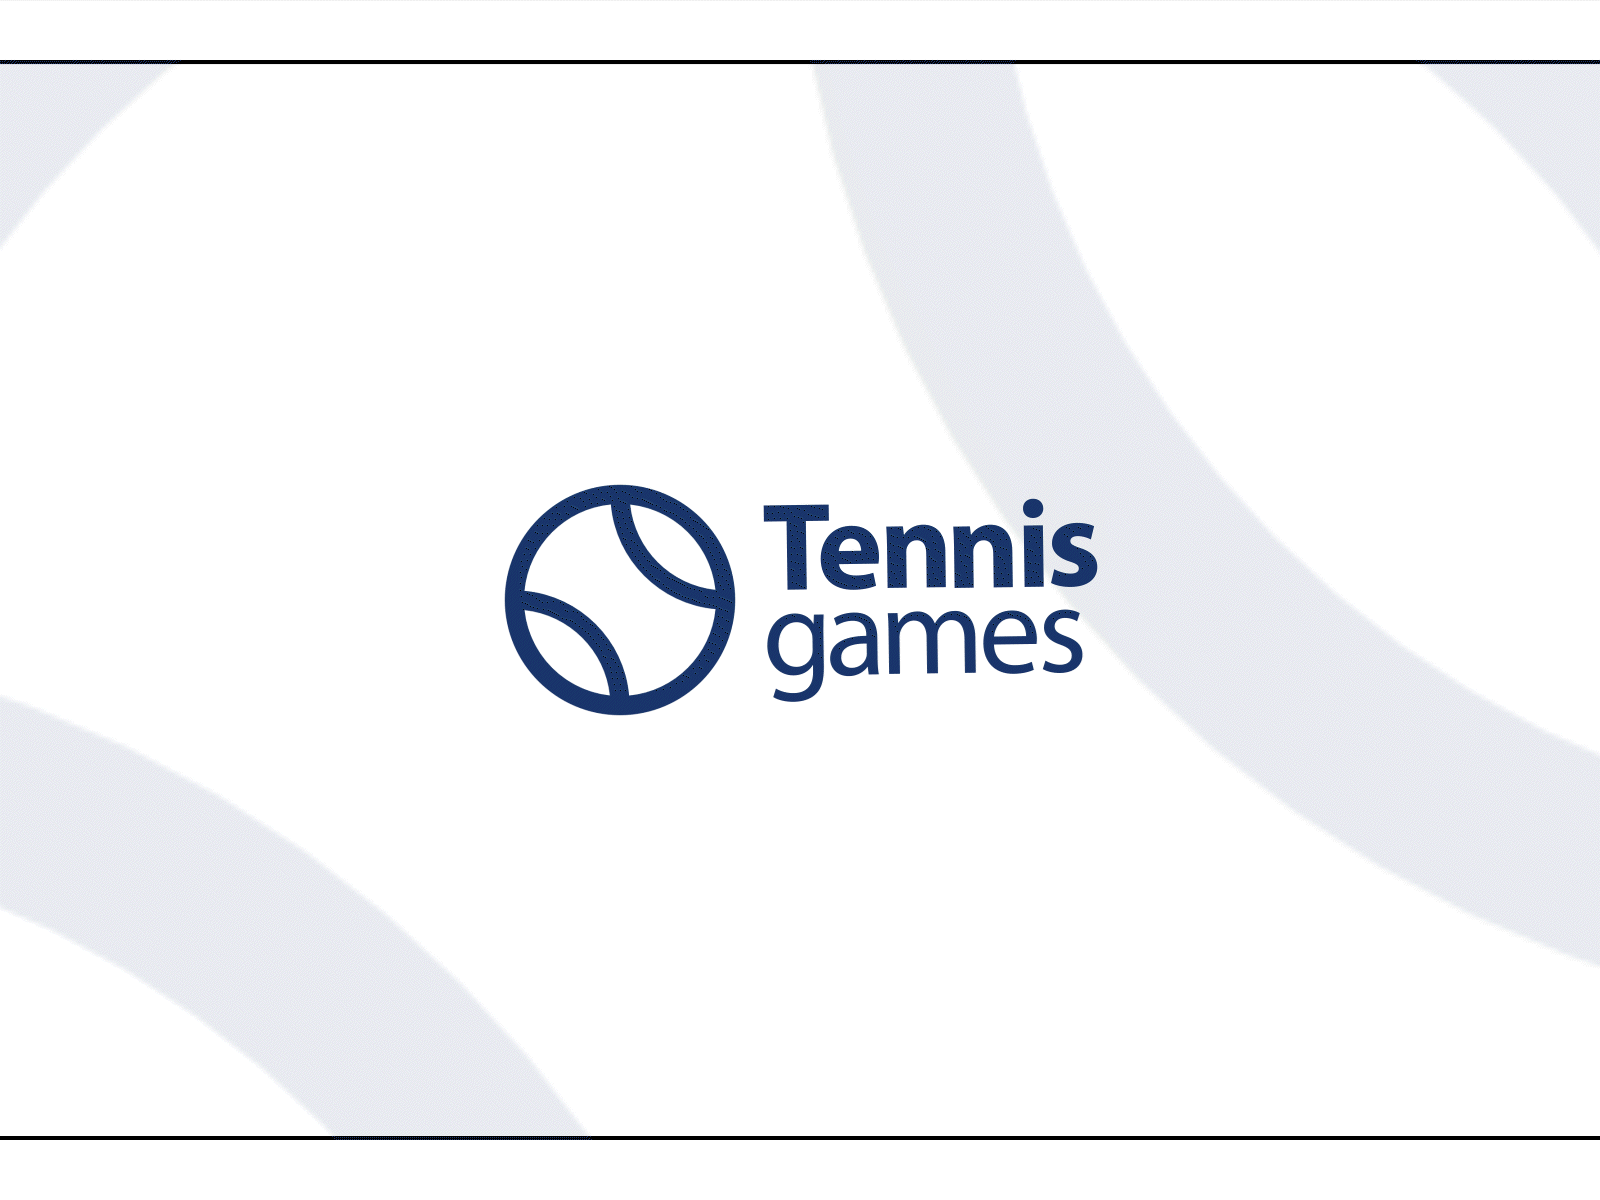 Tennis Games Logo Animation animated logo animation logo logo animation motion tennis logo